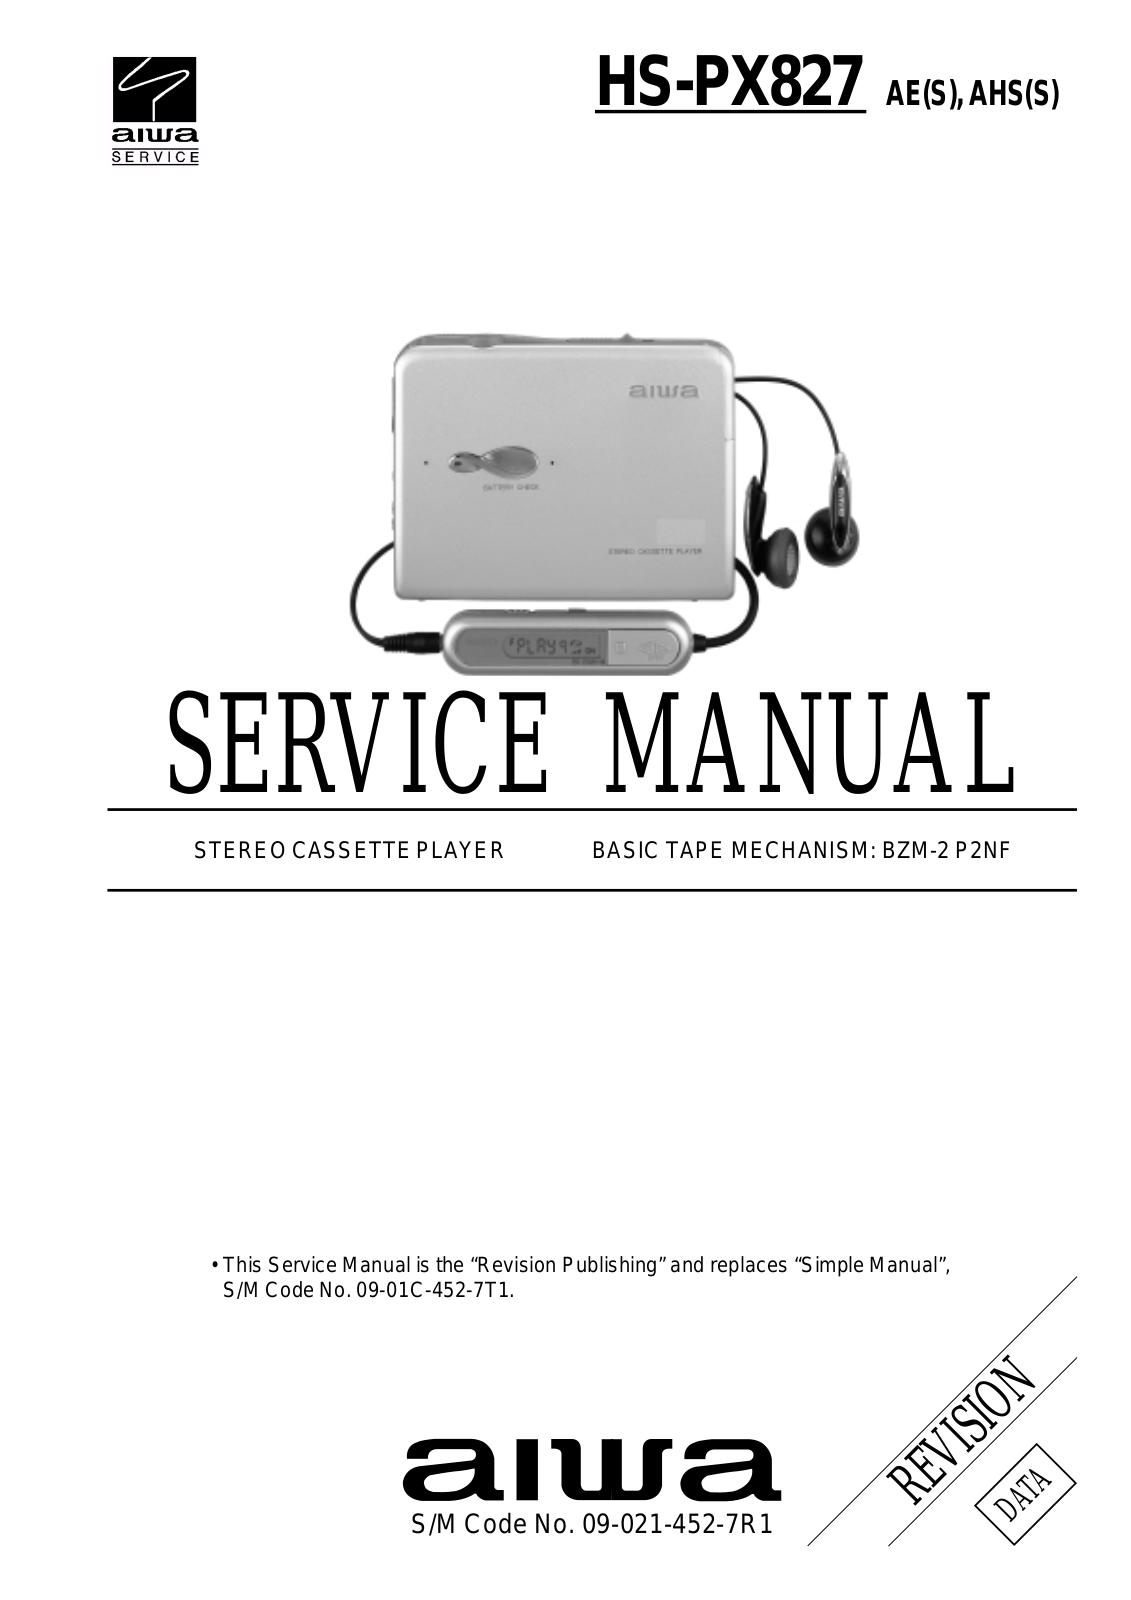 Aiwa HS-PX827 Service Manual